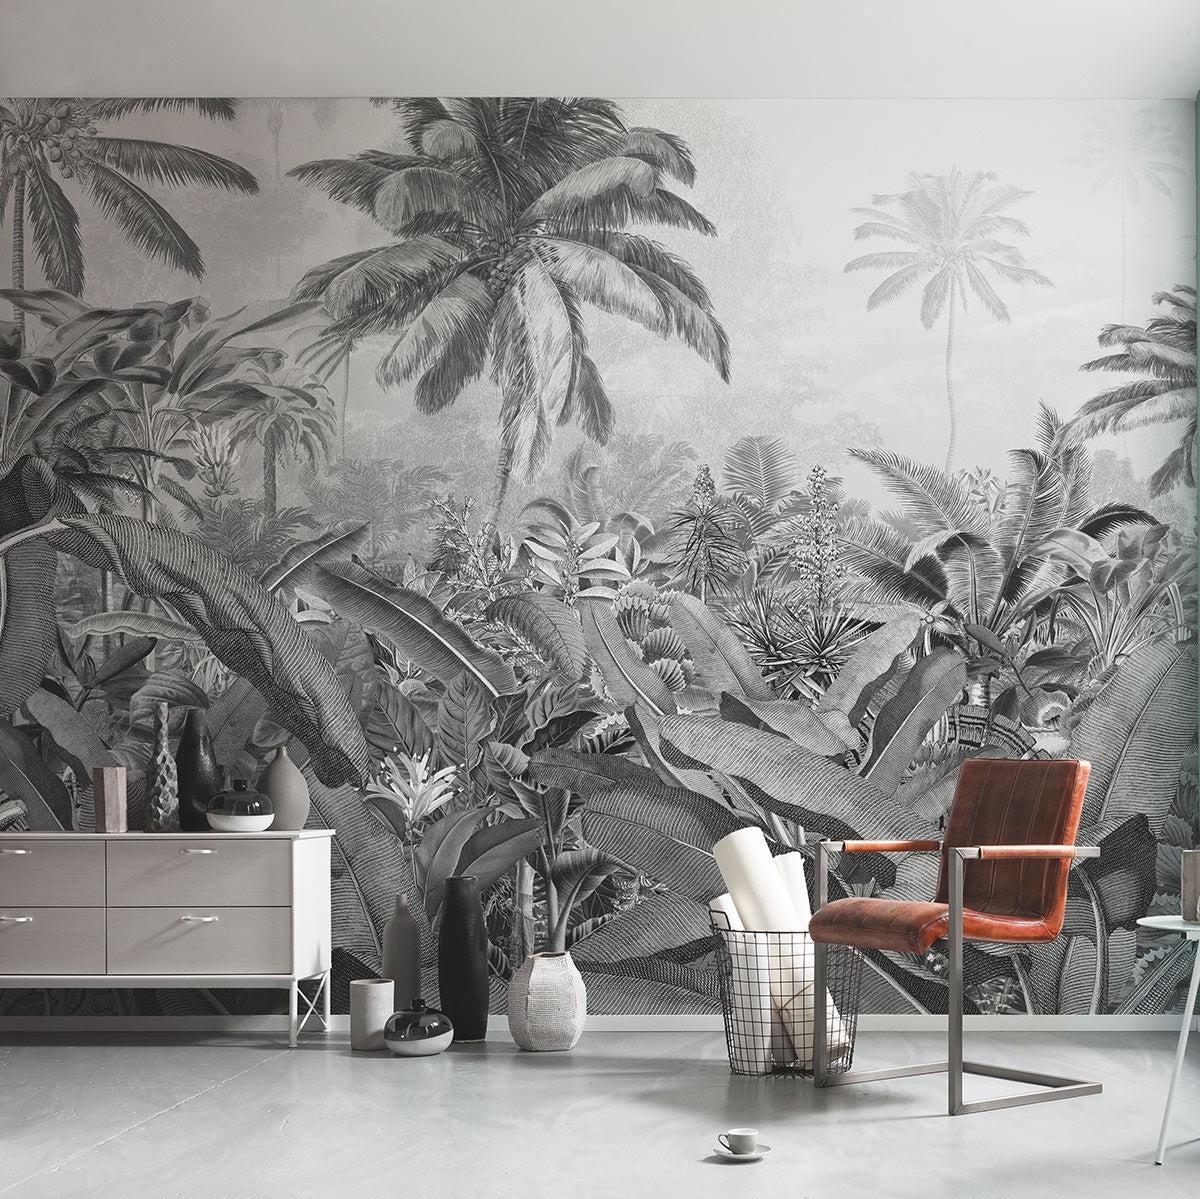 Frais Caribbean Black and White Mural: Jungle Wallpaper